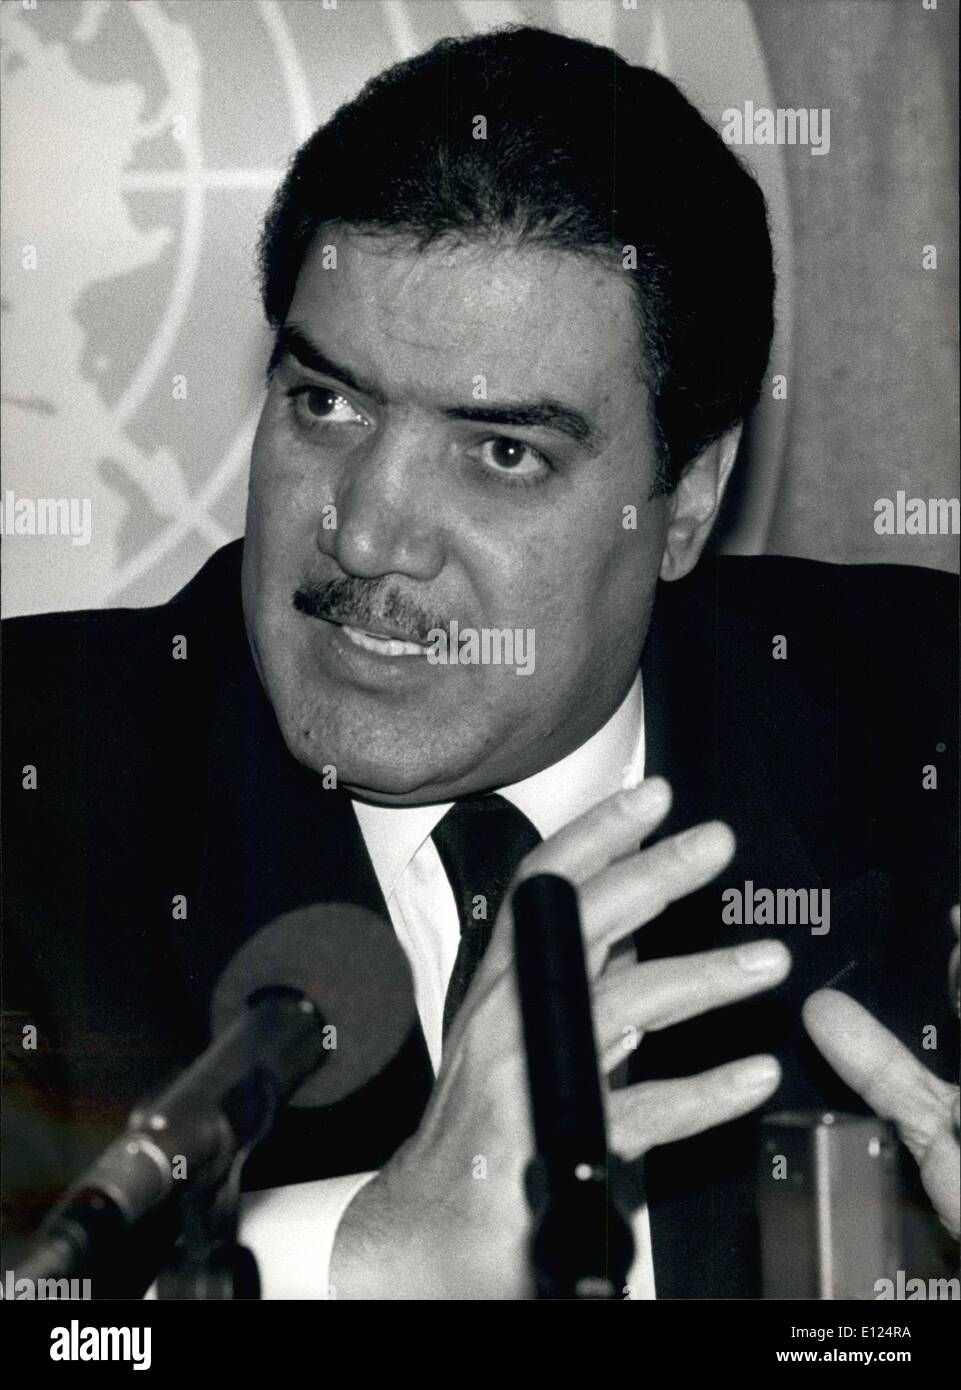 Nov. 11, 1990 - Mohammed Nadjibullah: Afghanistan's Presidnet Mohammed Nadjibullah at a press conference during peace talks with representatives of the Afghan resistance movement in Geneva, No. 21. Stock Photo